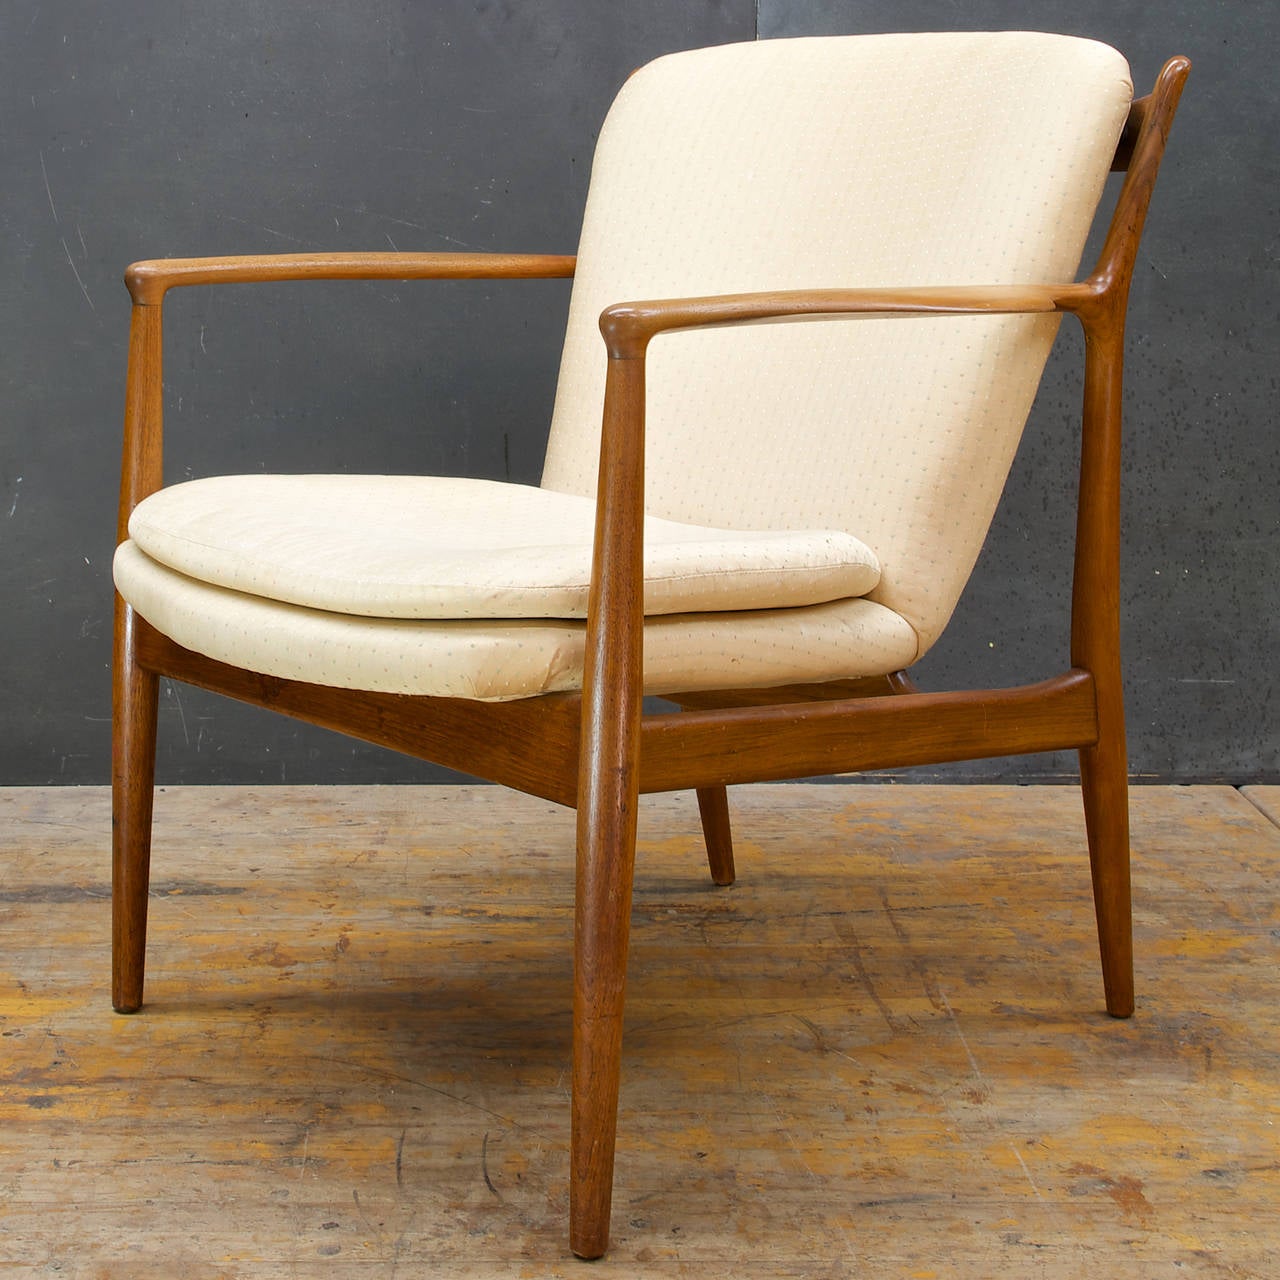 Scandinavian Modern Finn Juhl Walnut Delegate Chair in Original Condition by Baker Furniture Co